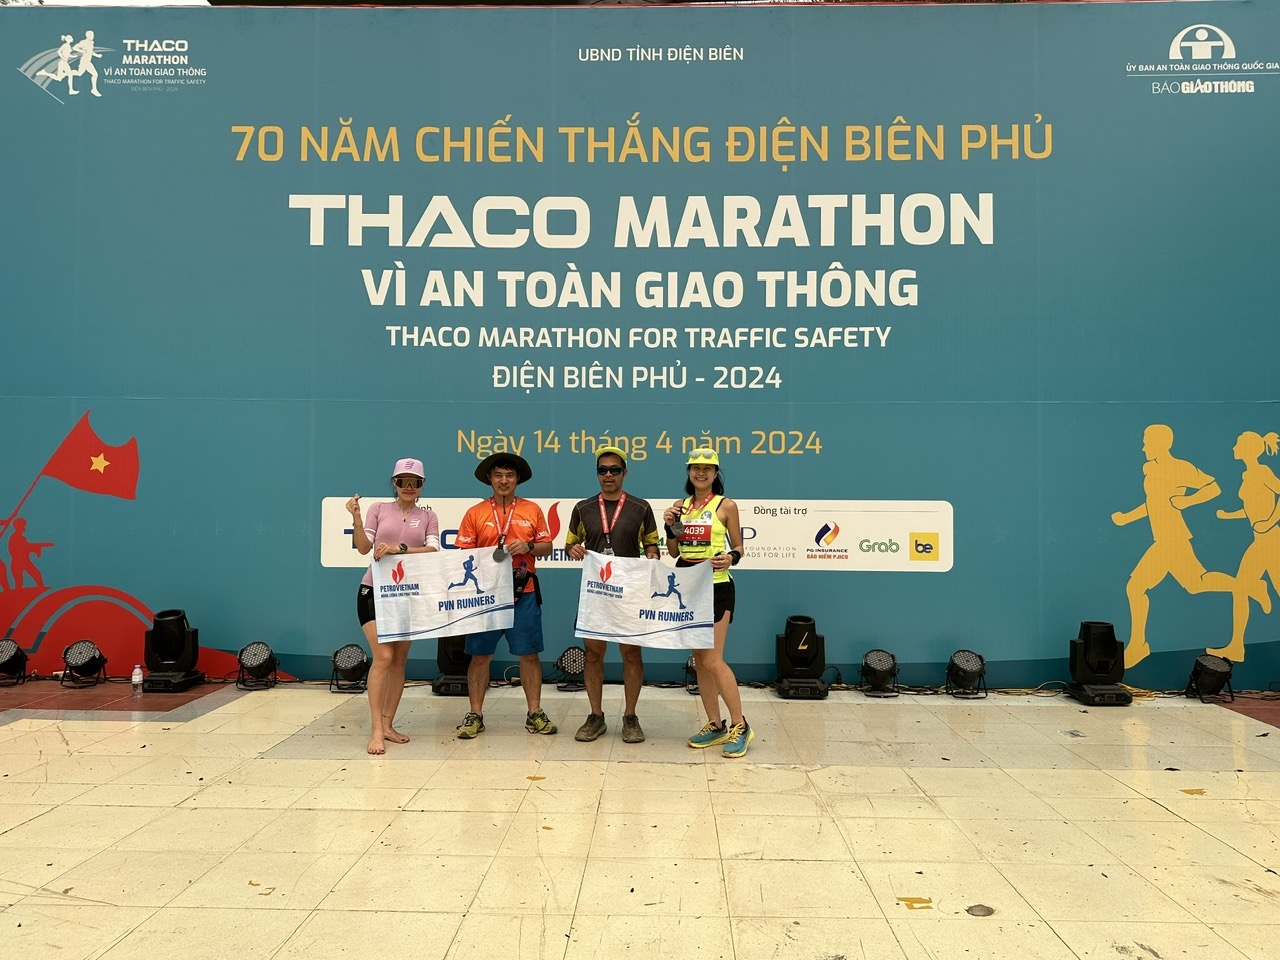 petrovietnam dong hanh cung giai chay thaco marathon vi an toan giao thong  dien bien phu 2024 hinh 12